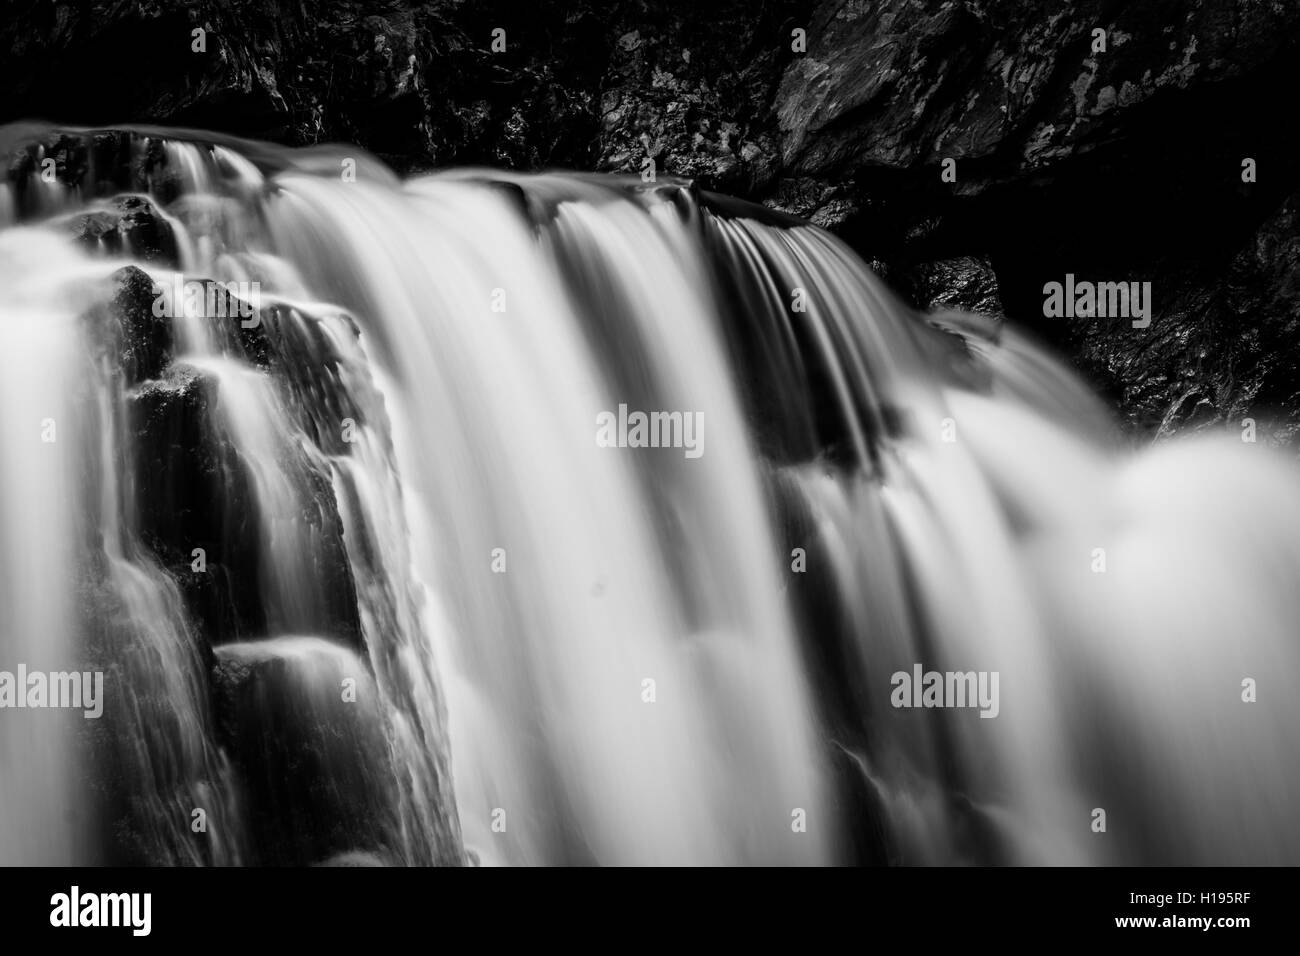 Details of Kilgore Falls, at Rocks State Park, Maryland. Stock Photo